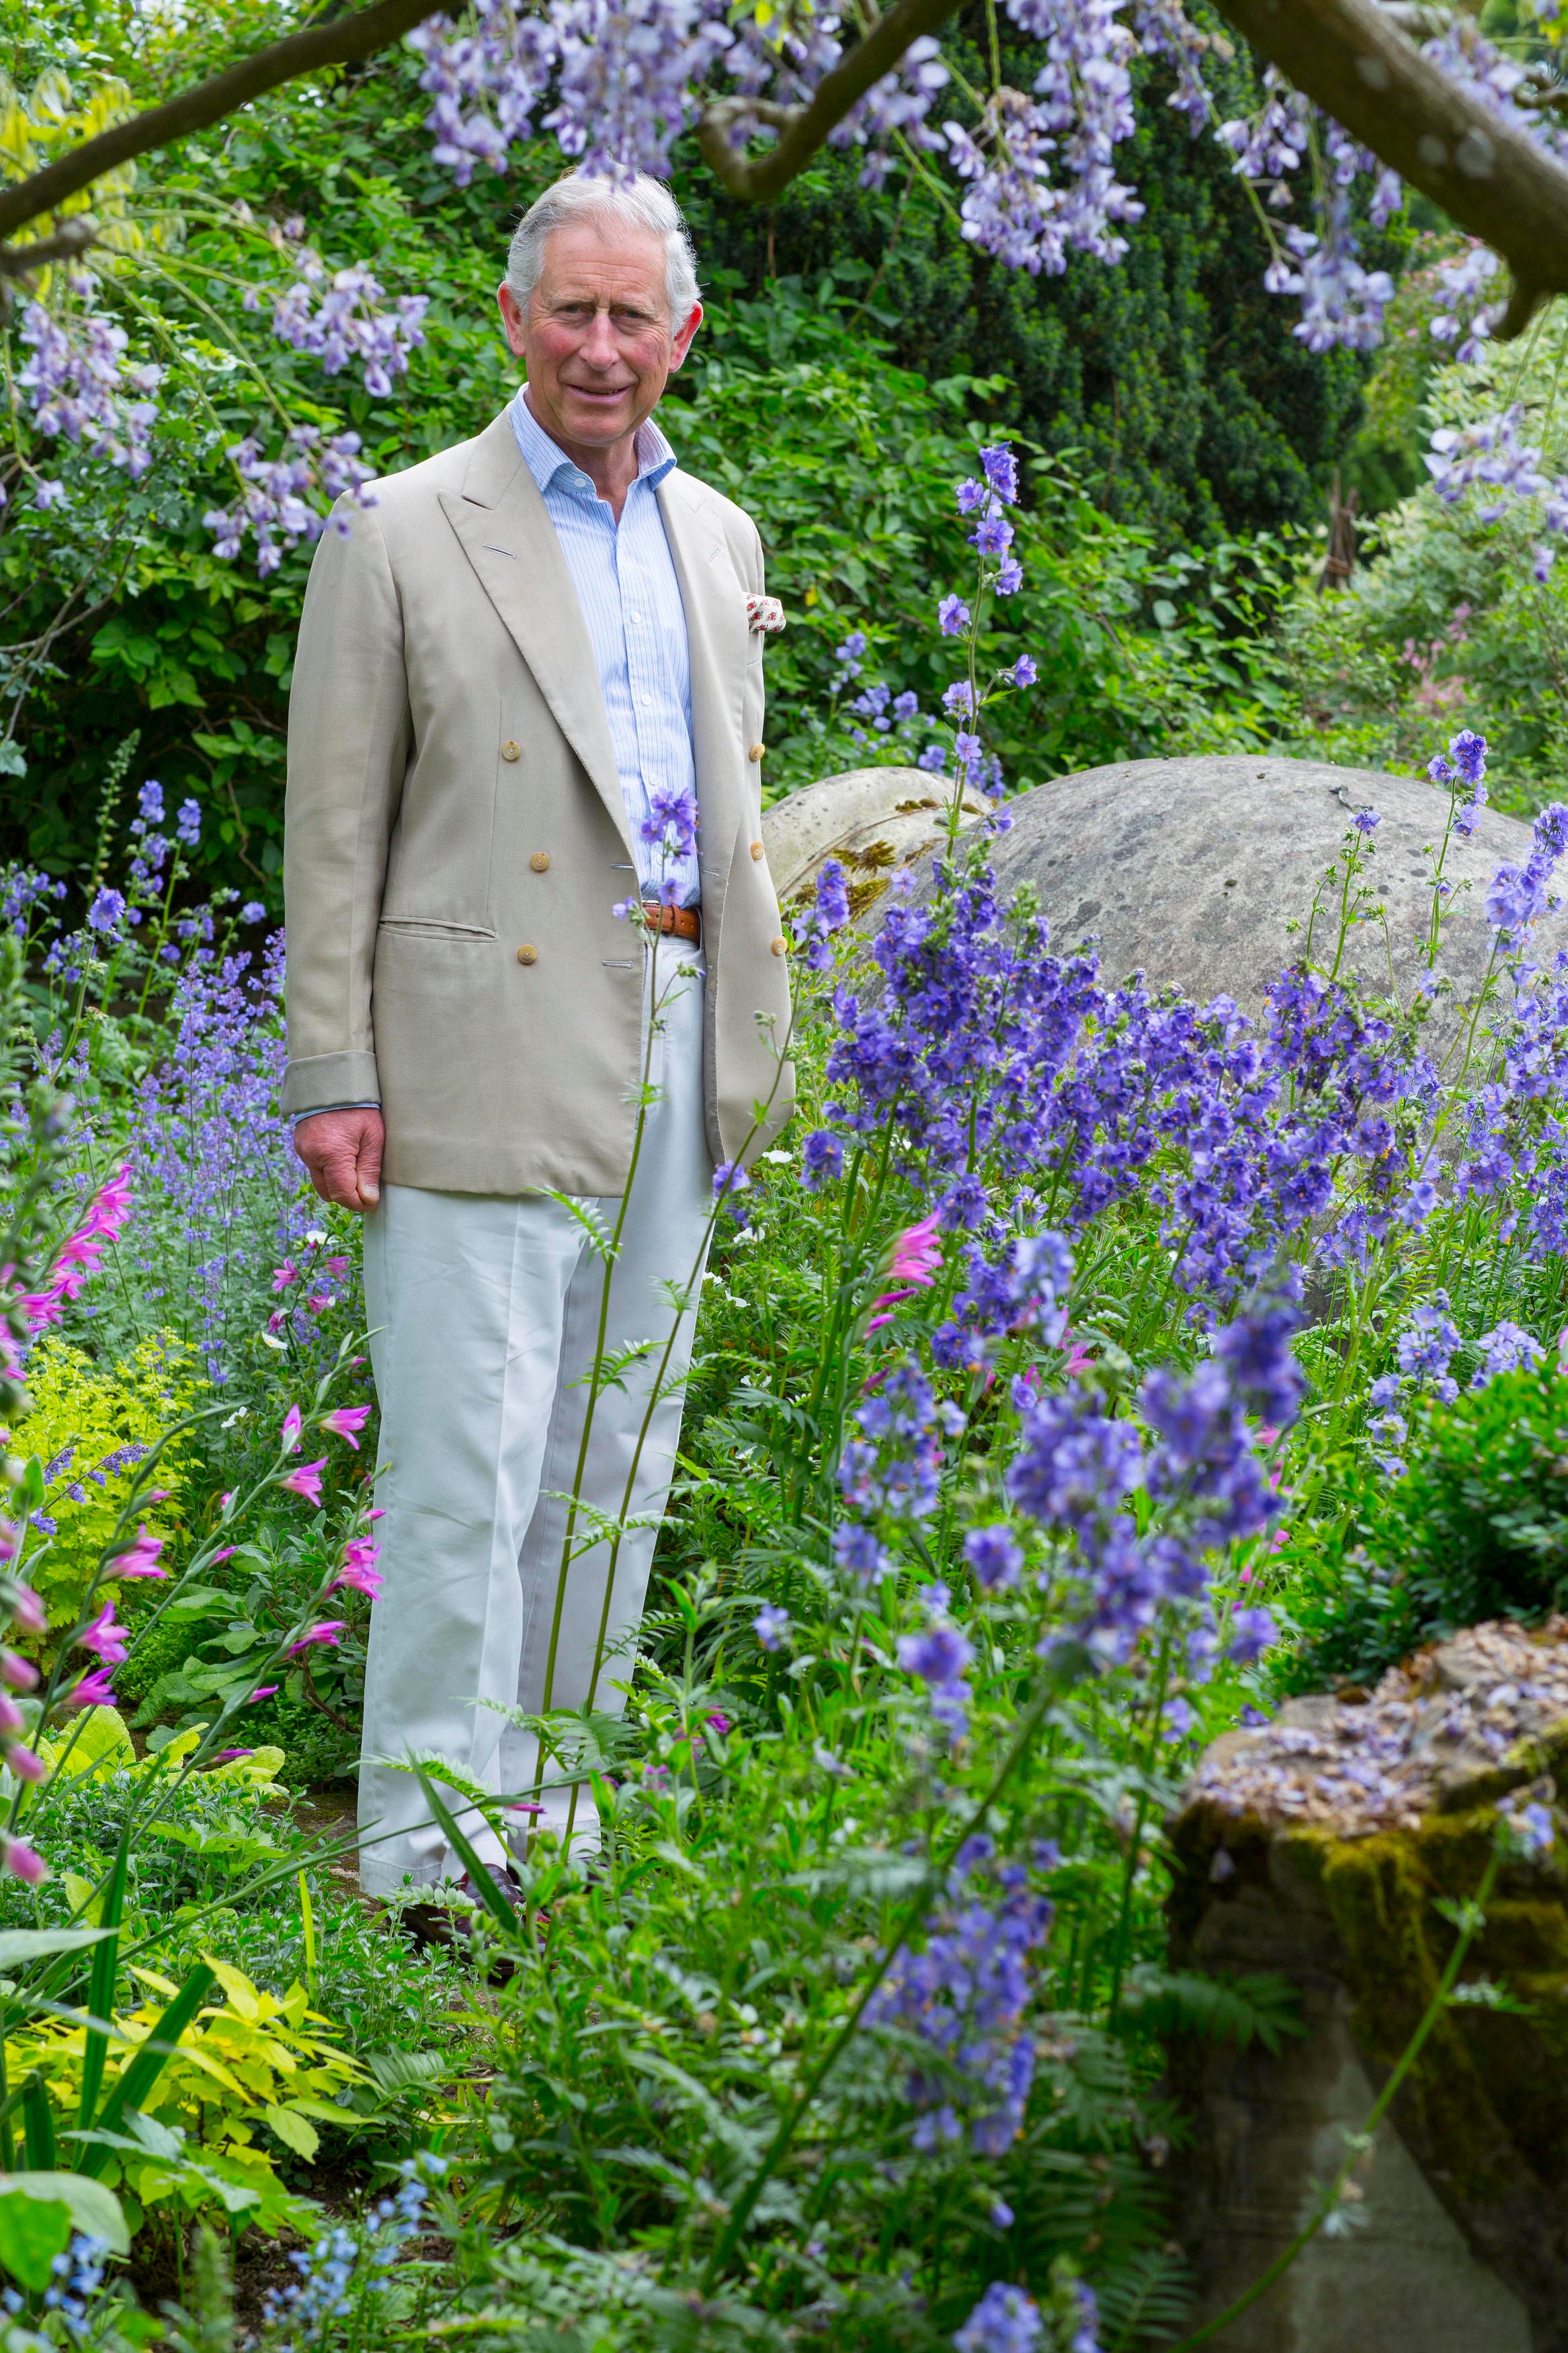 Charles among the blooms at Highgrove